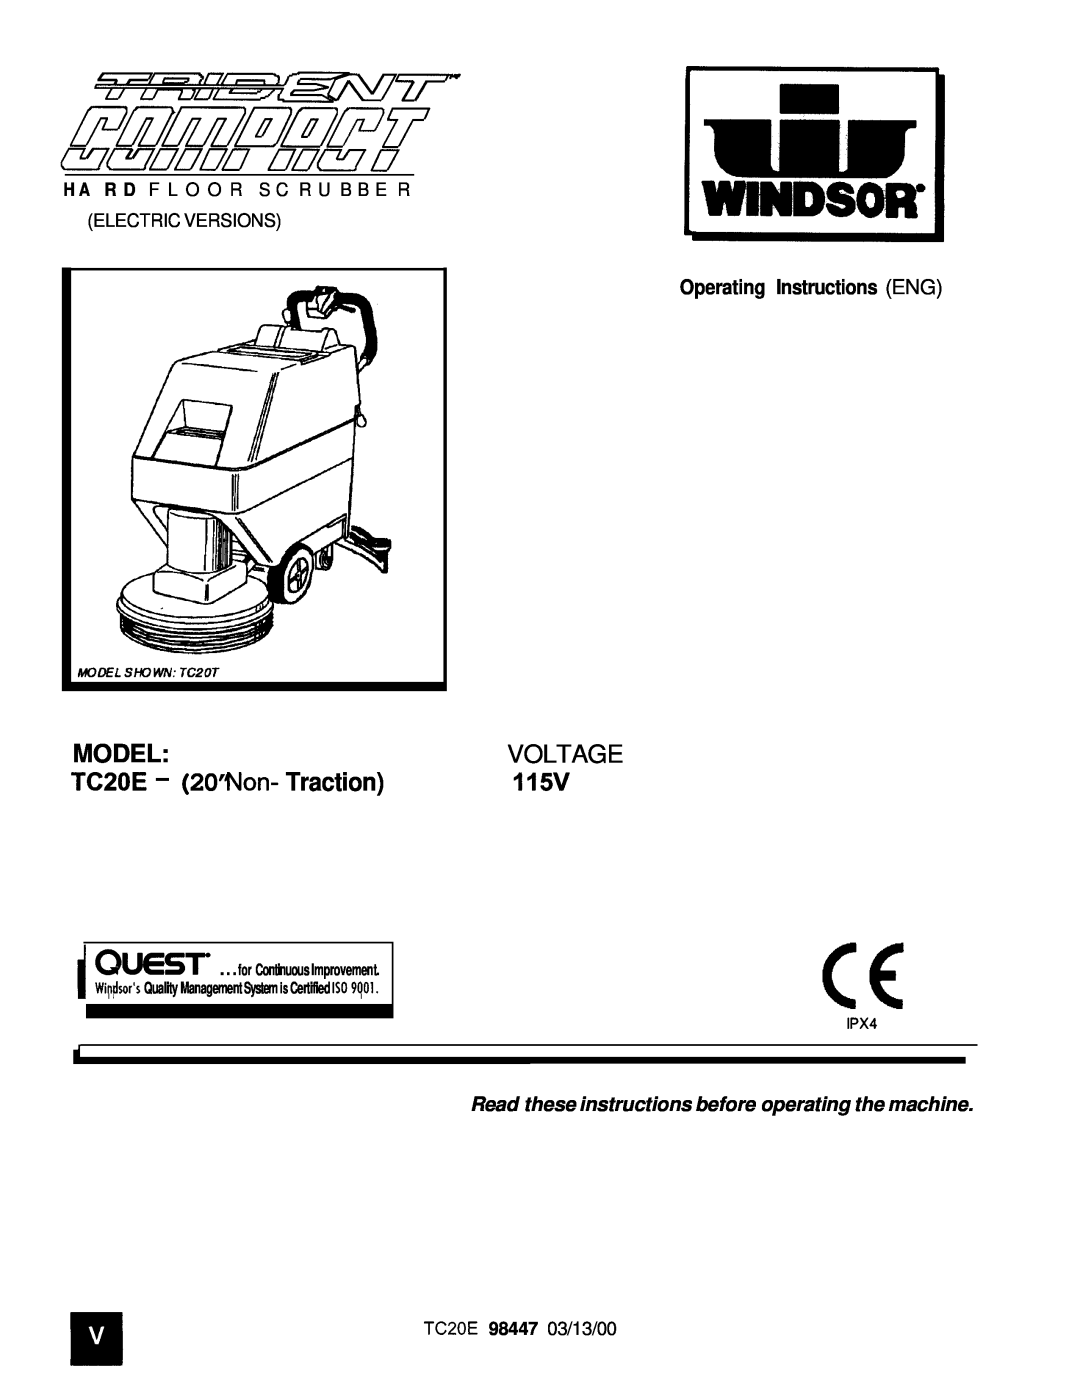 Windsor operating instructions MODEL TCZOE - 20”Non- Traction, Voltage, 115V, Operating Instructions ENG 